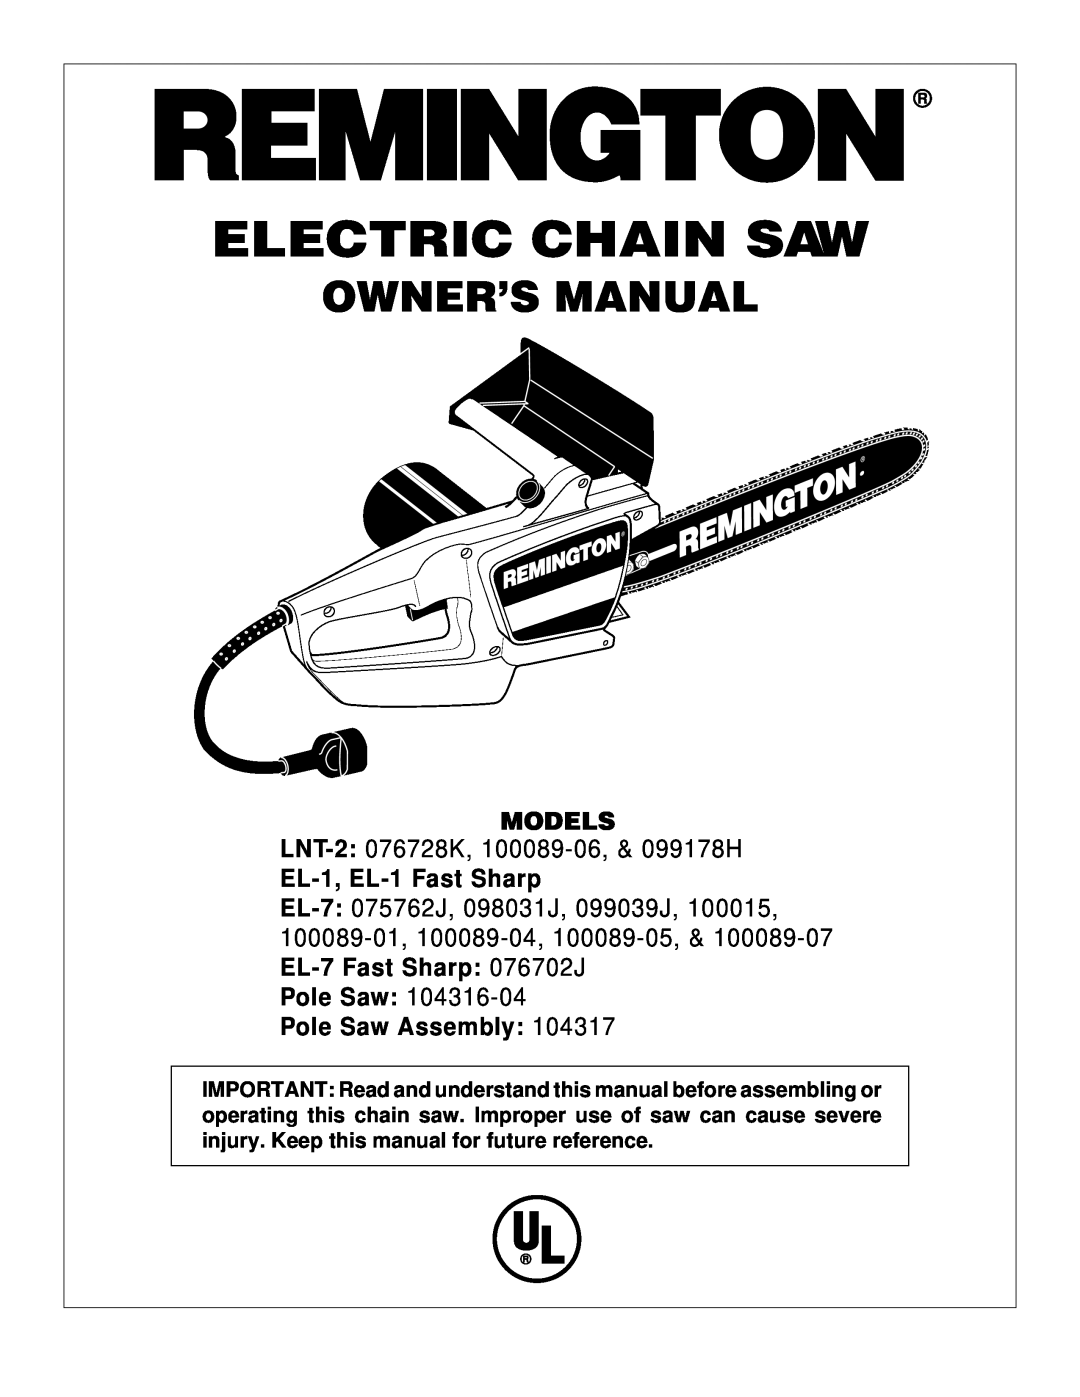 Desa 100089-01 owner manual Electric Chain Saw, Models, LNT-2 076728K, 100089-06, & 099178H, EL-1, EL-1 Fast Sharp 